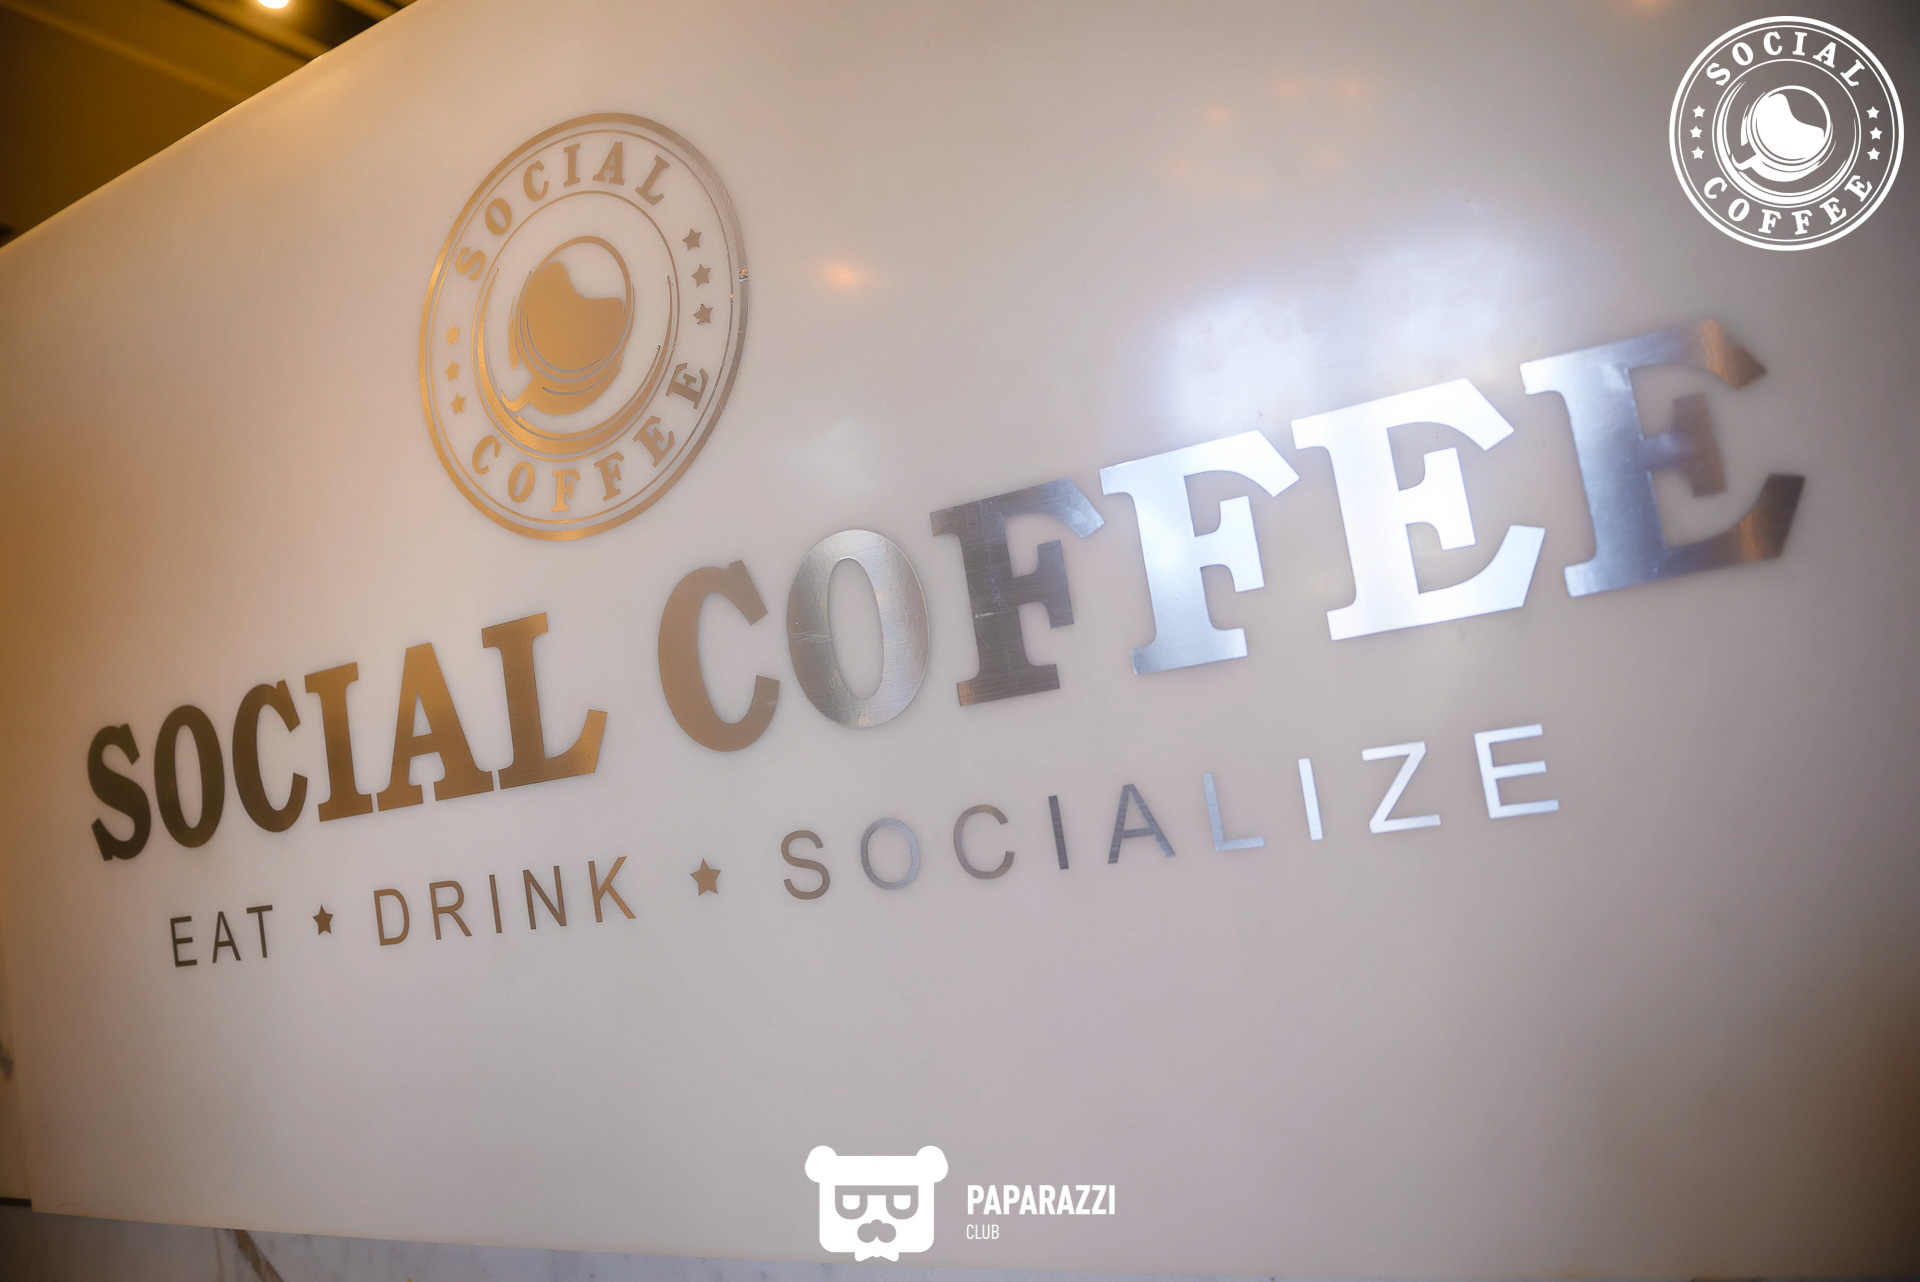 Social Coffee